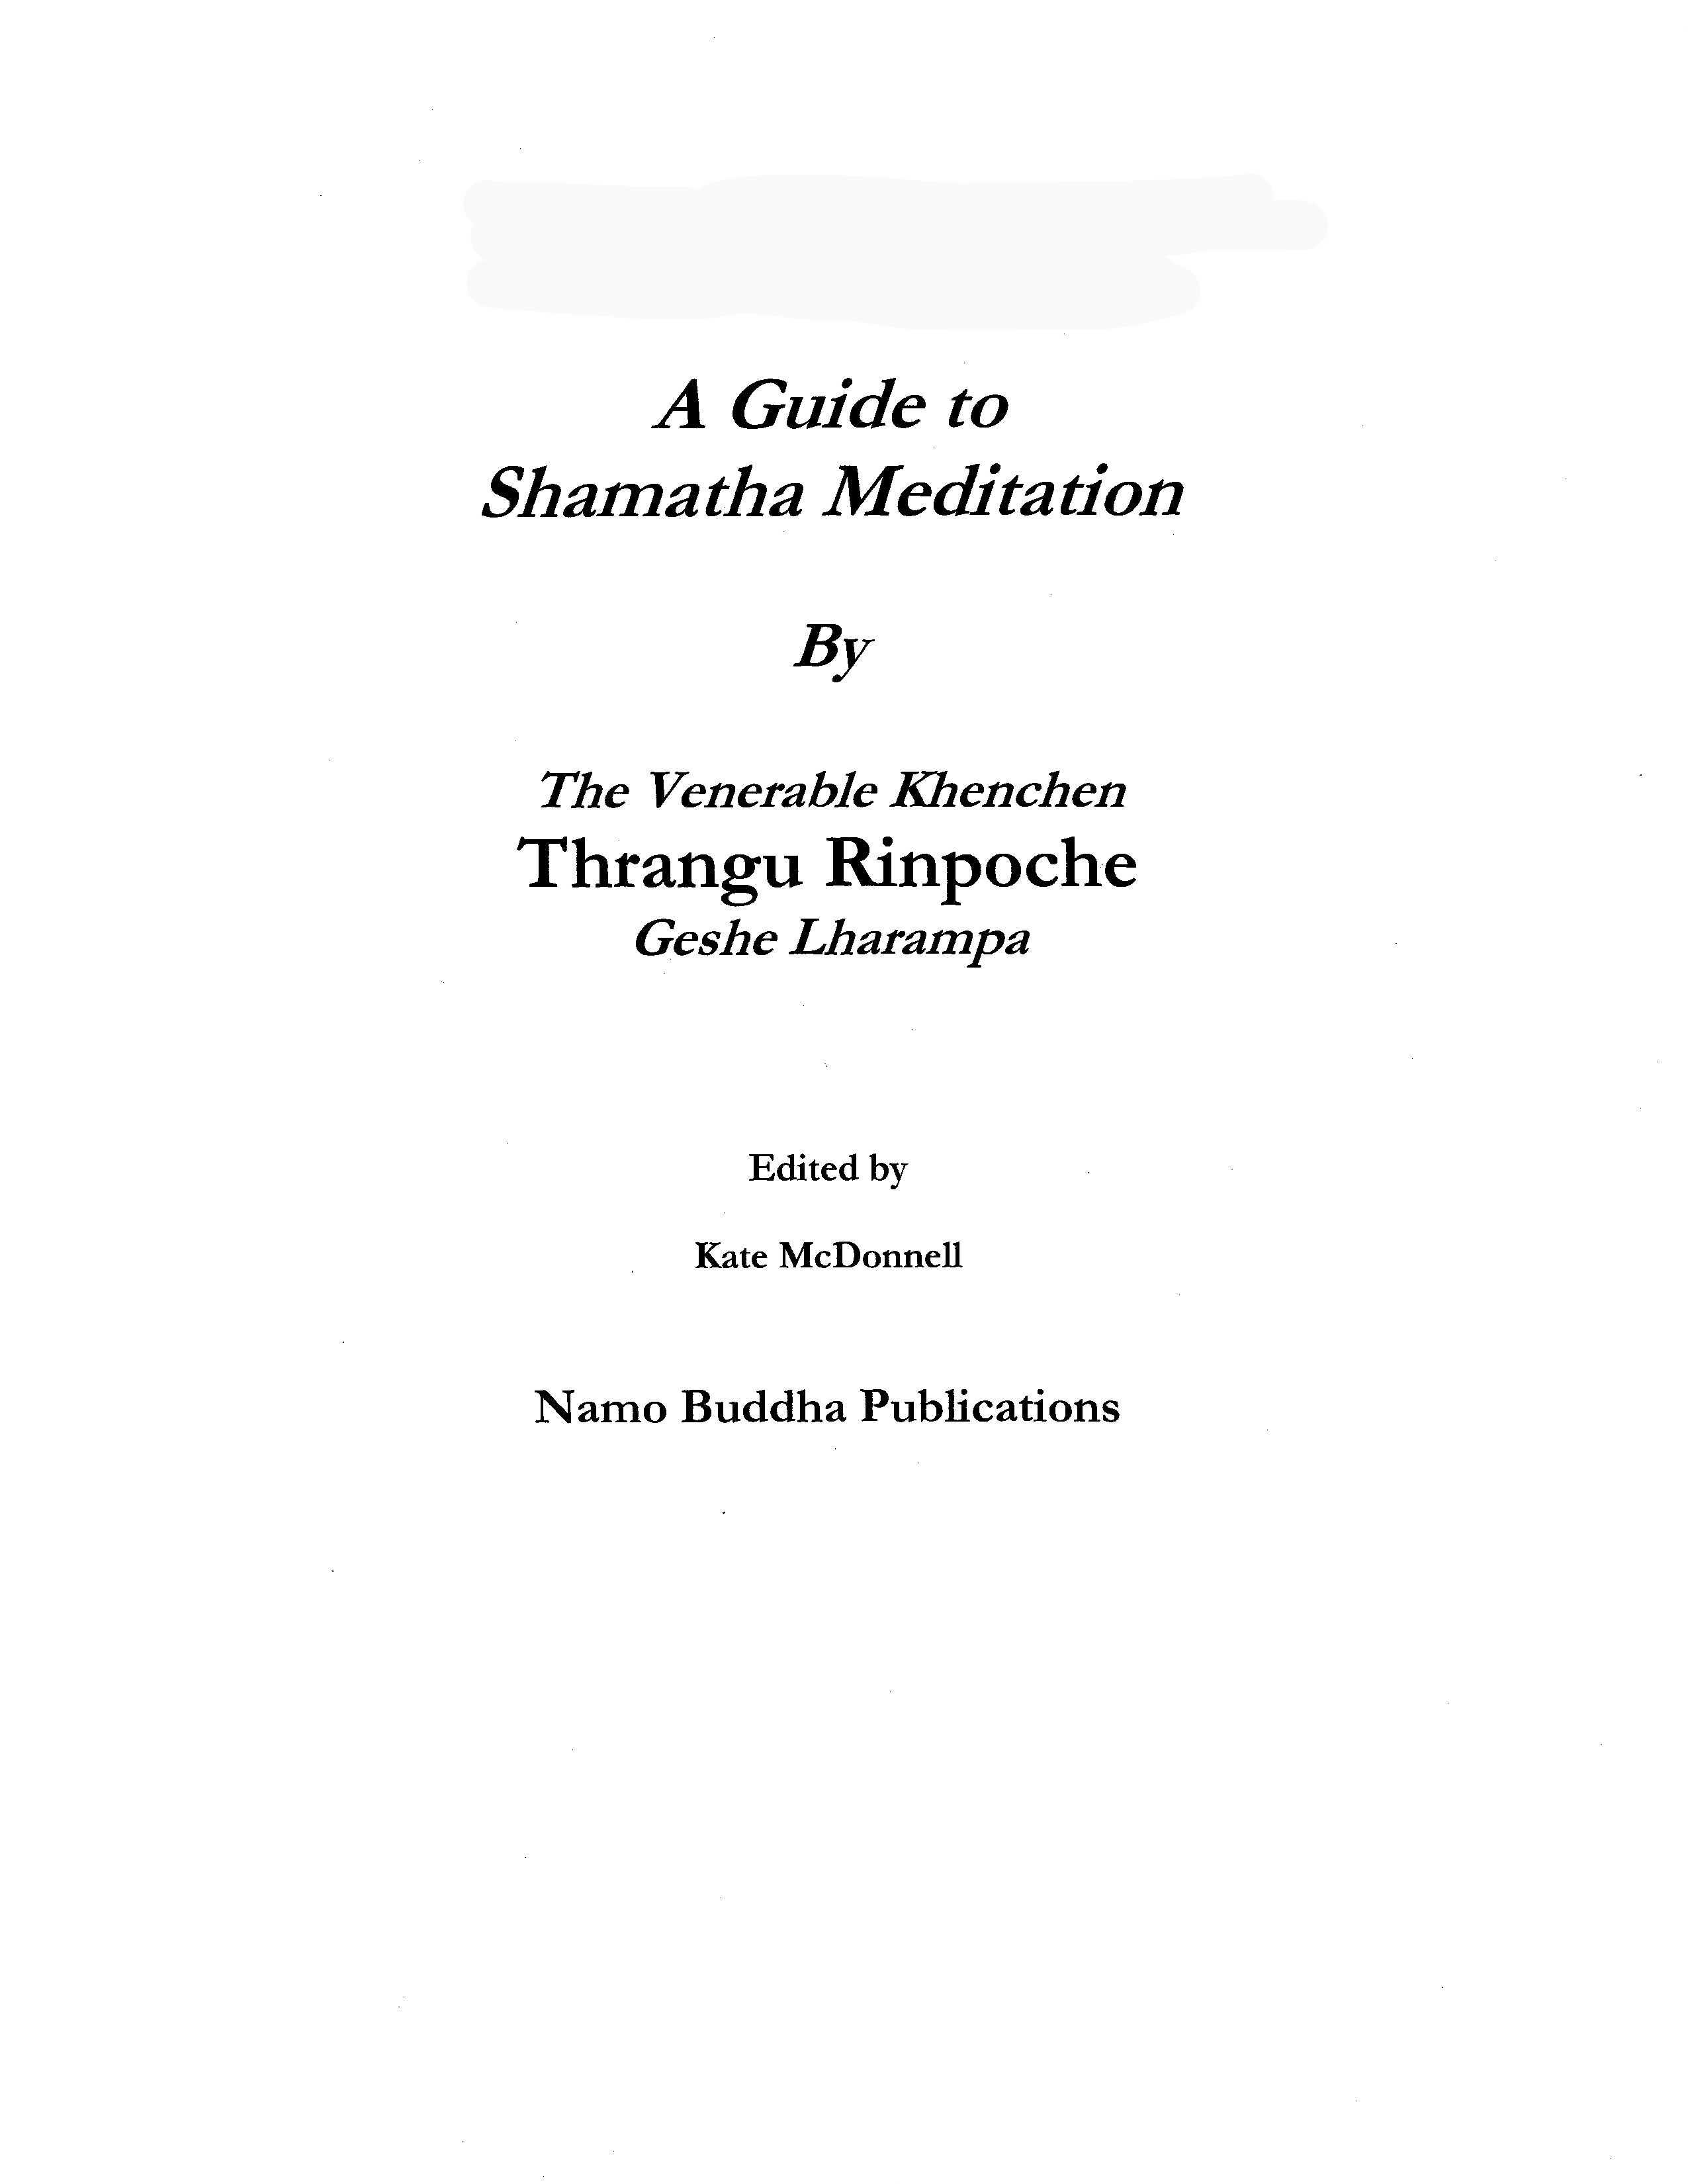 A Short Guide to Shamatha Meditation (PDF)